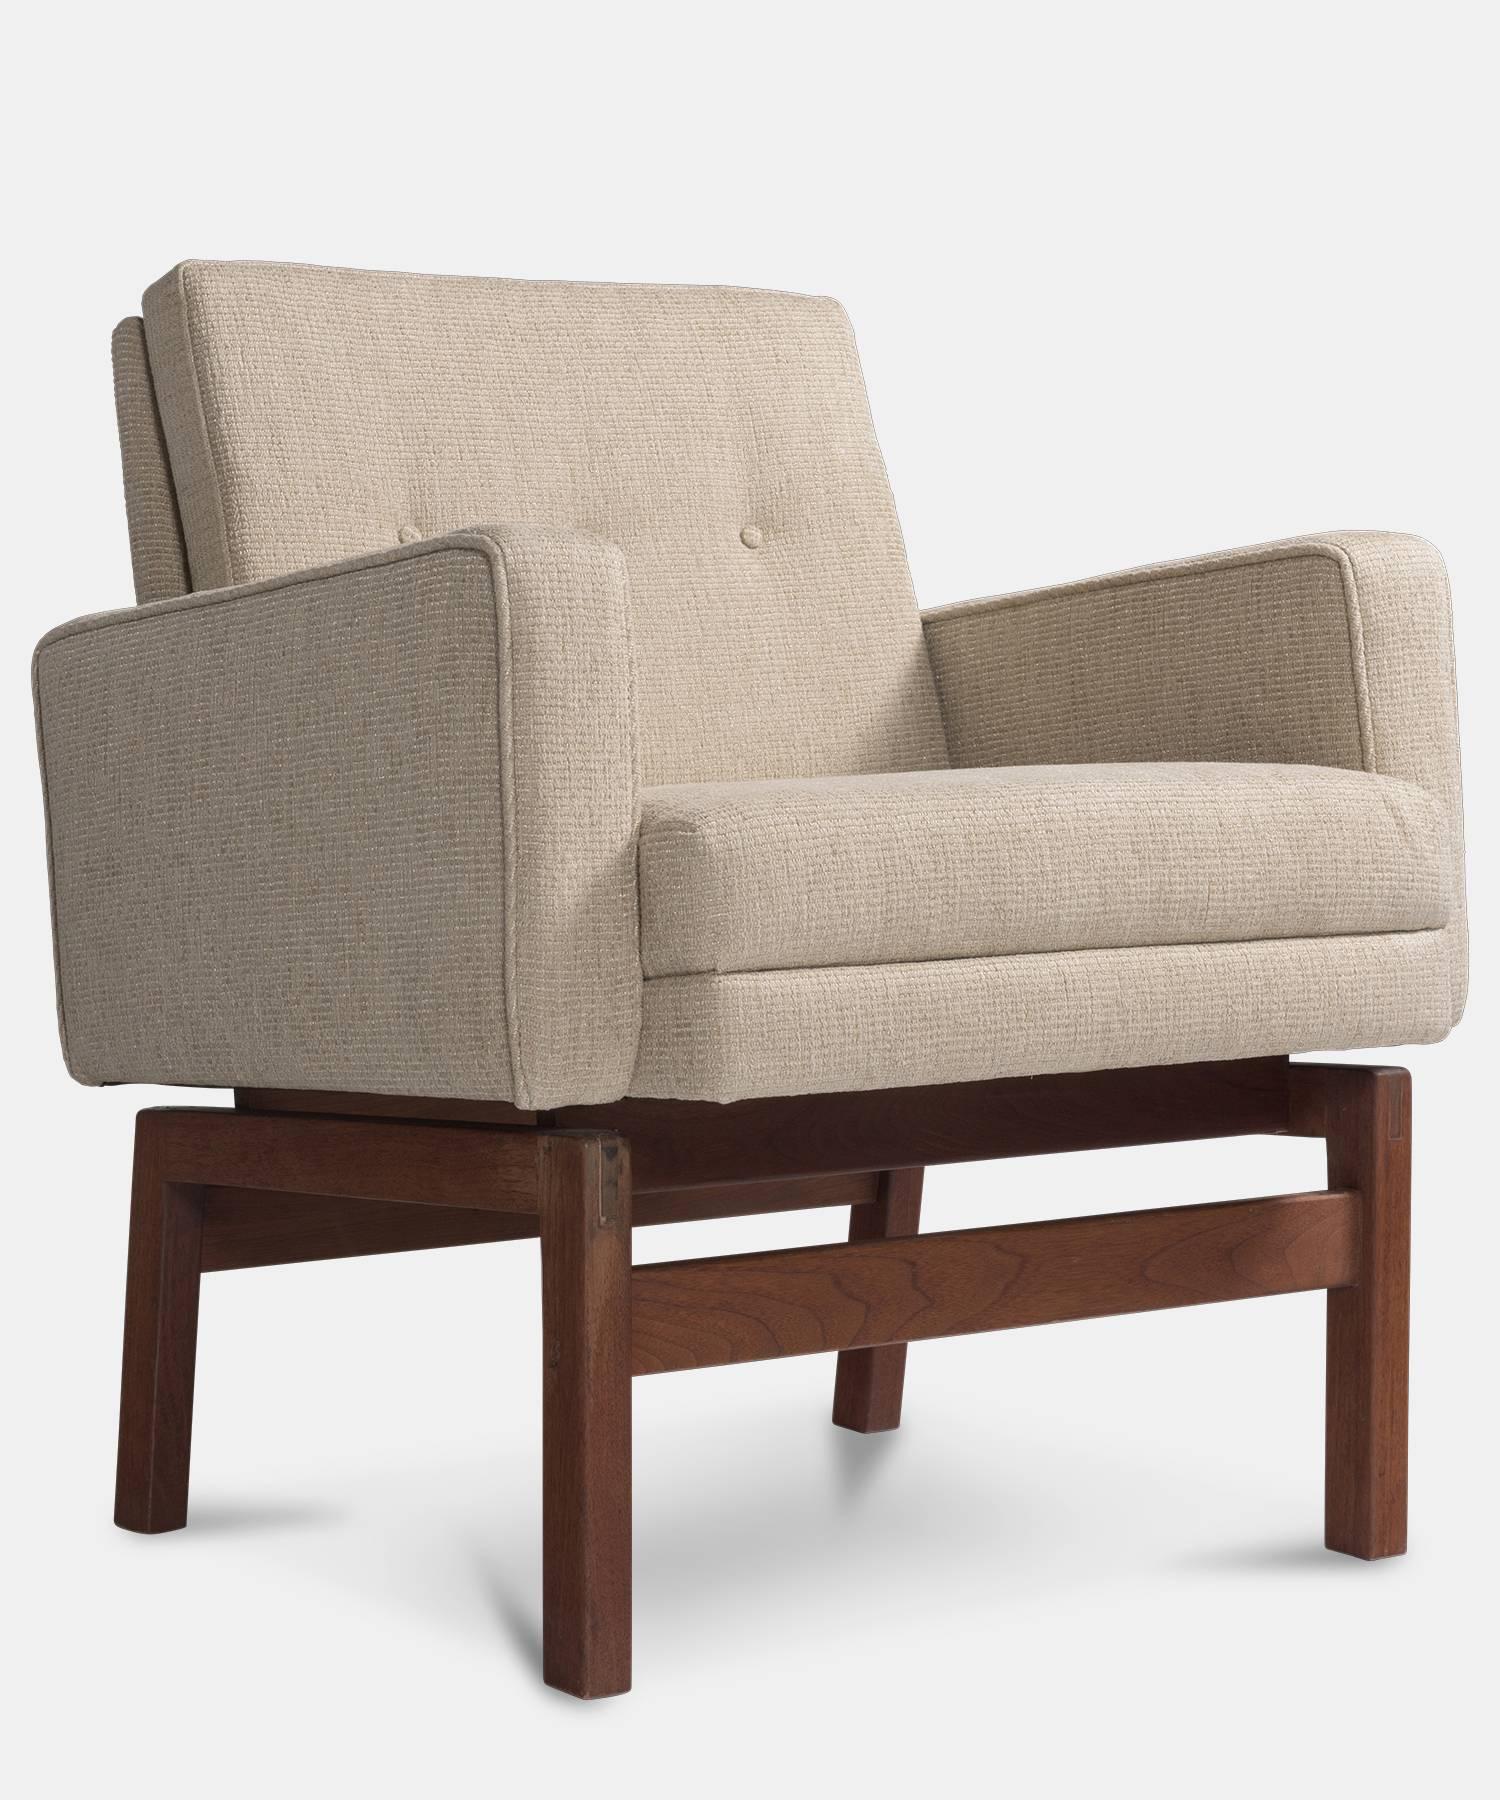 American Jens Risom Modern Lounge Chairs, circa 1975